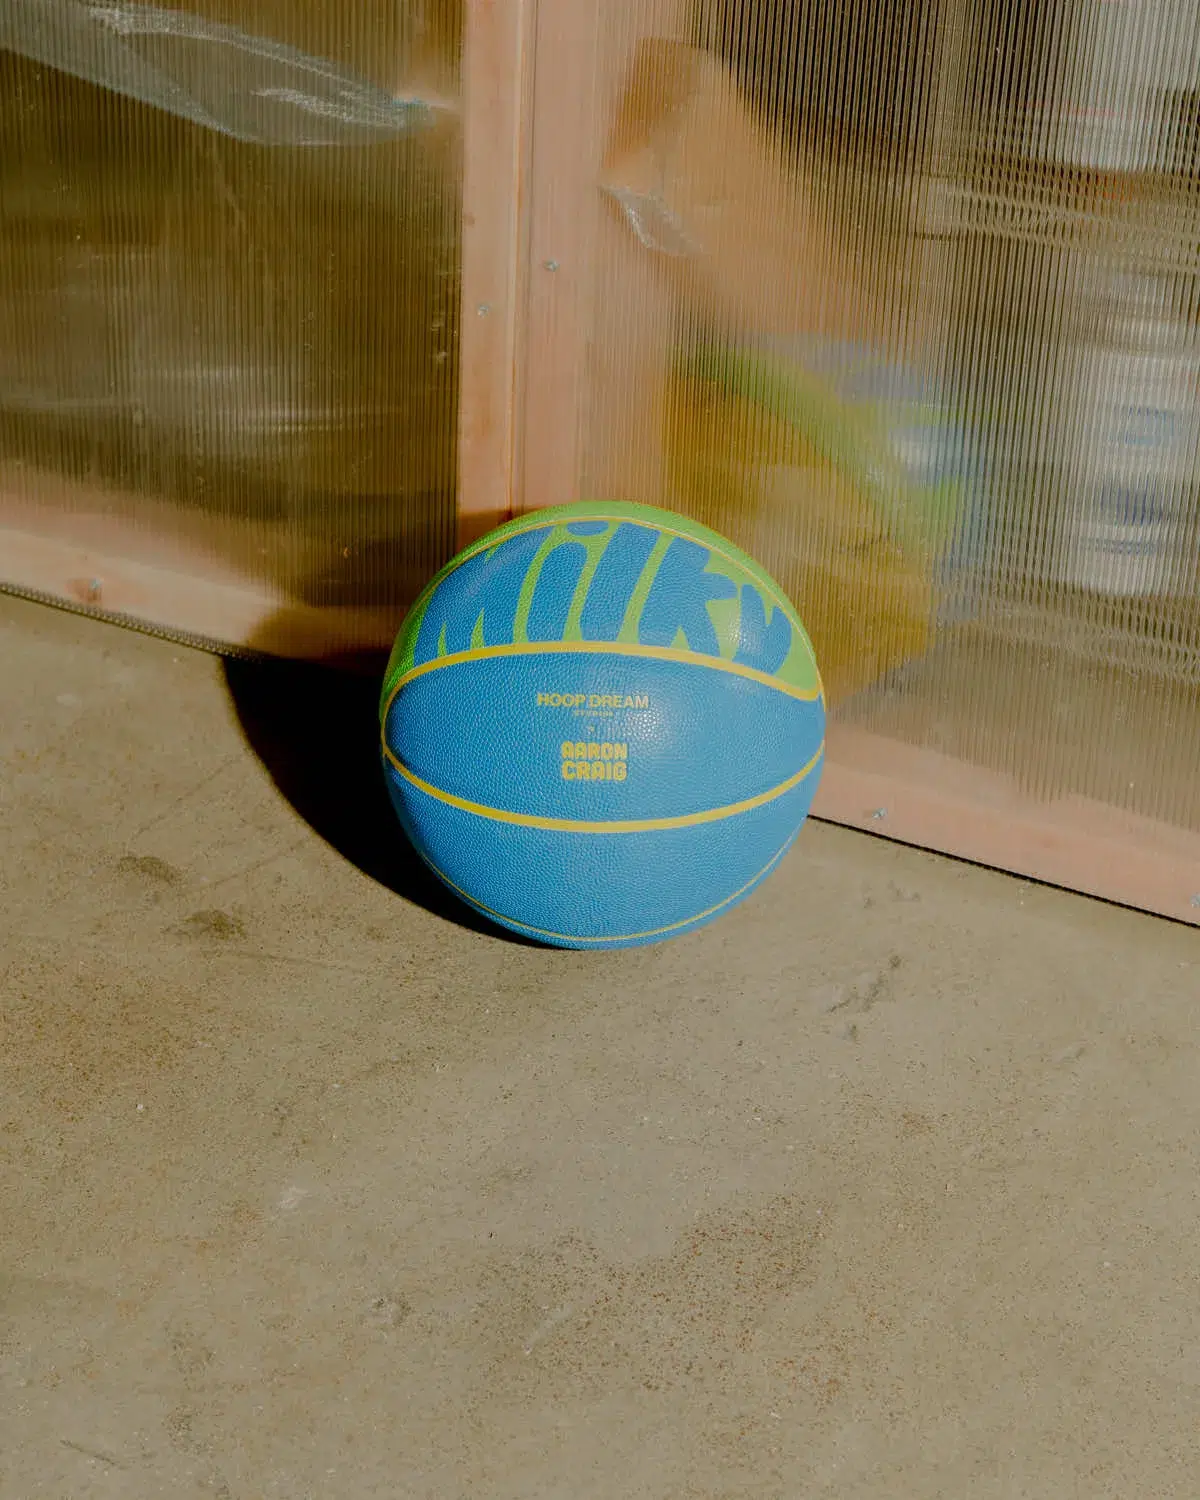 A LV Camo Ball resting on a concrete surface.